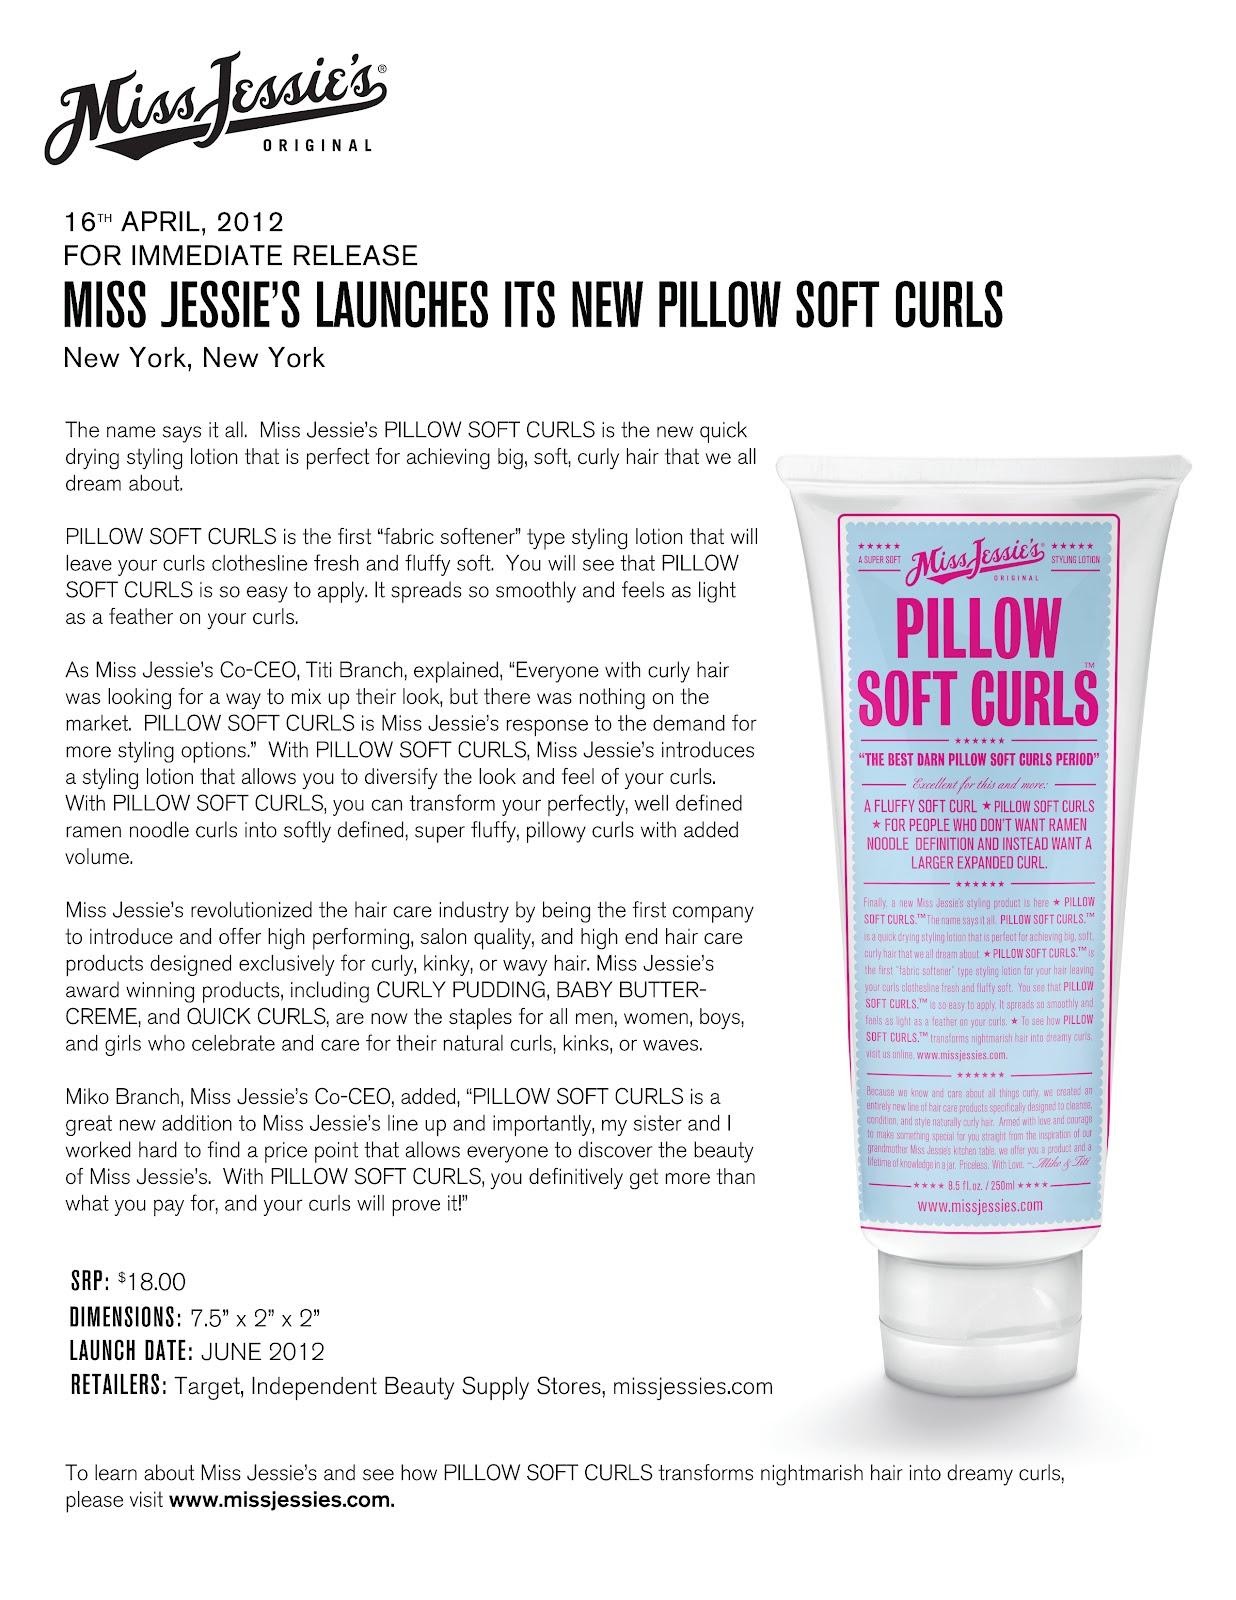 Miss Jessie's Pillow Soft Curls press release